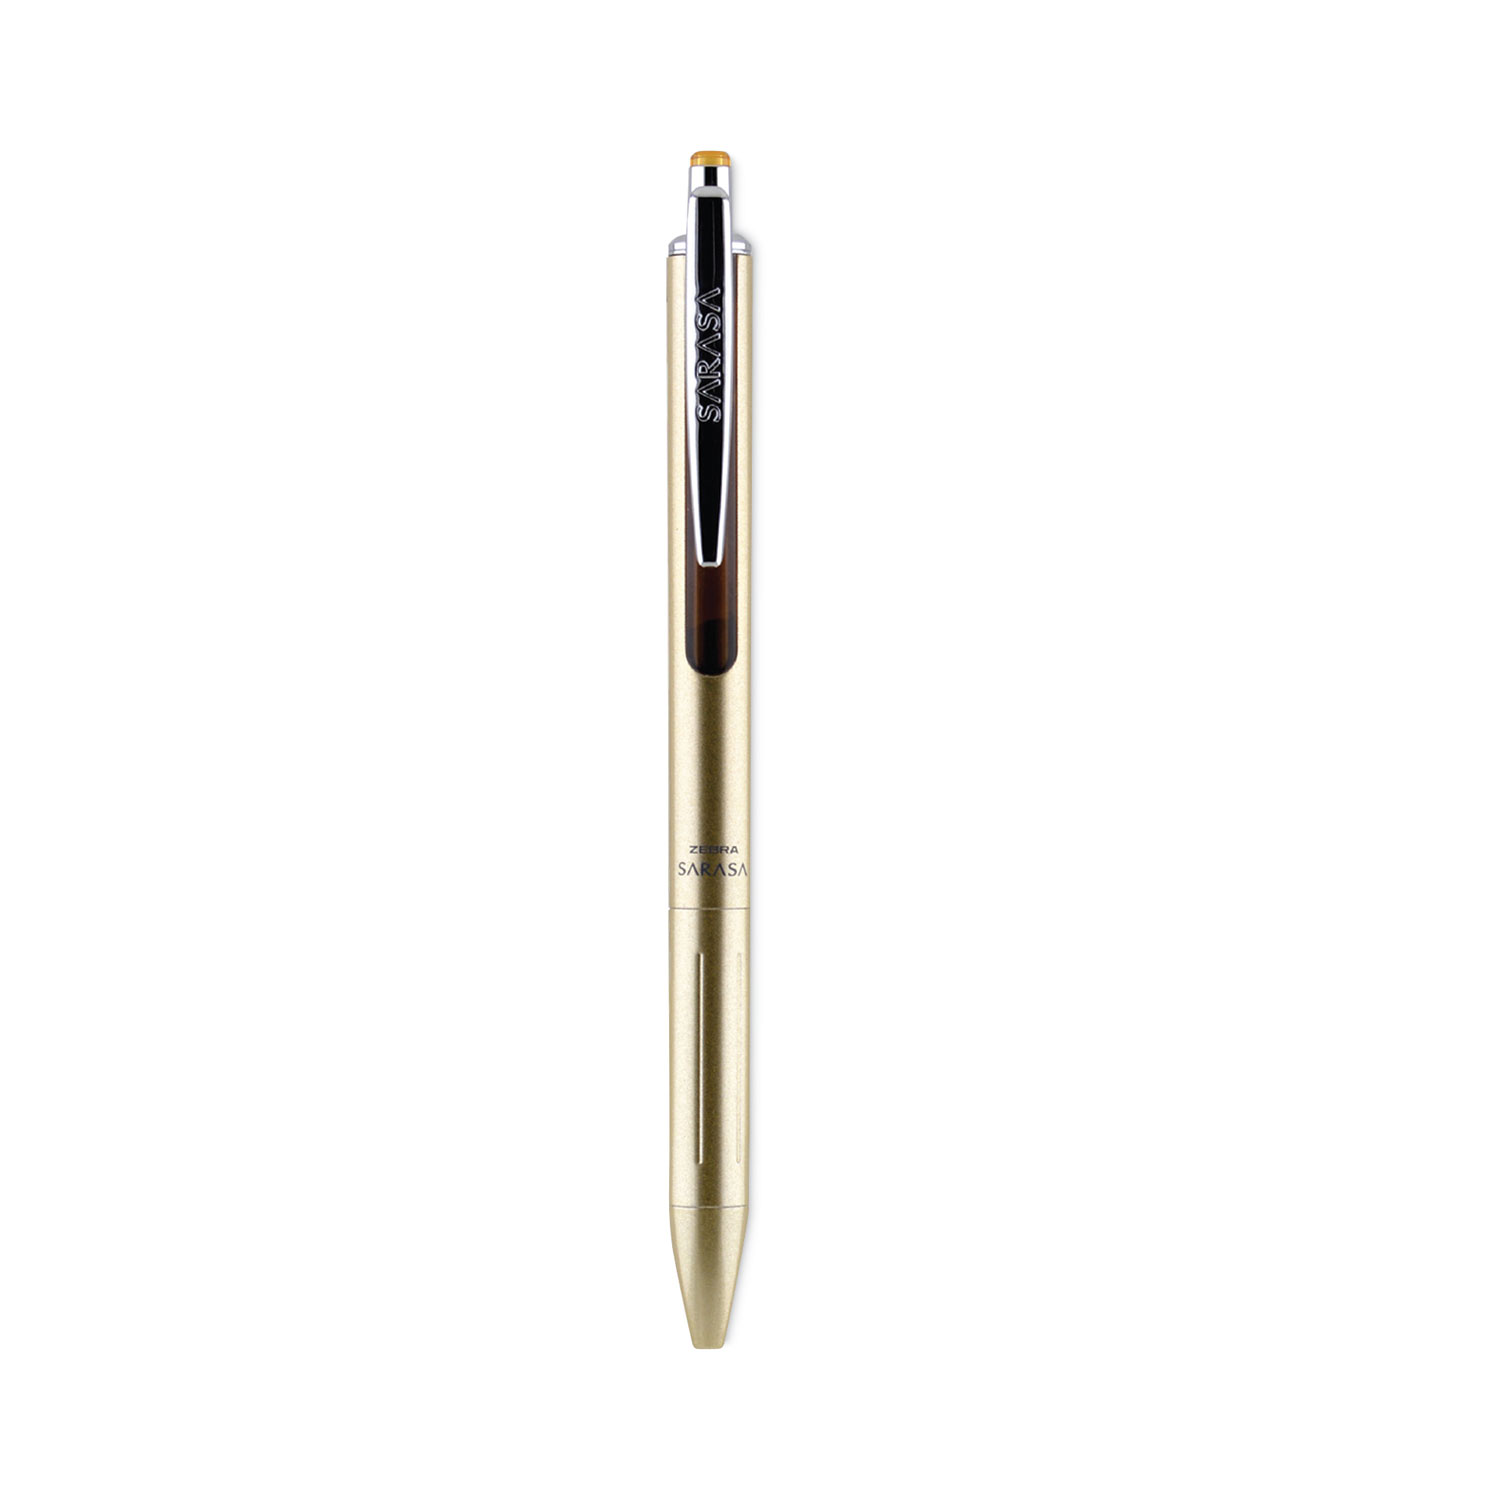 Zebra Sarasa Study Gel Pen - 0.5 mm - Black